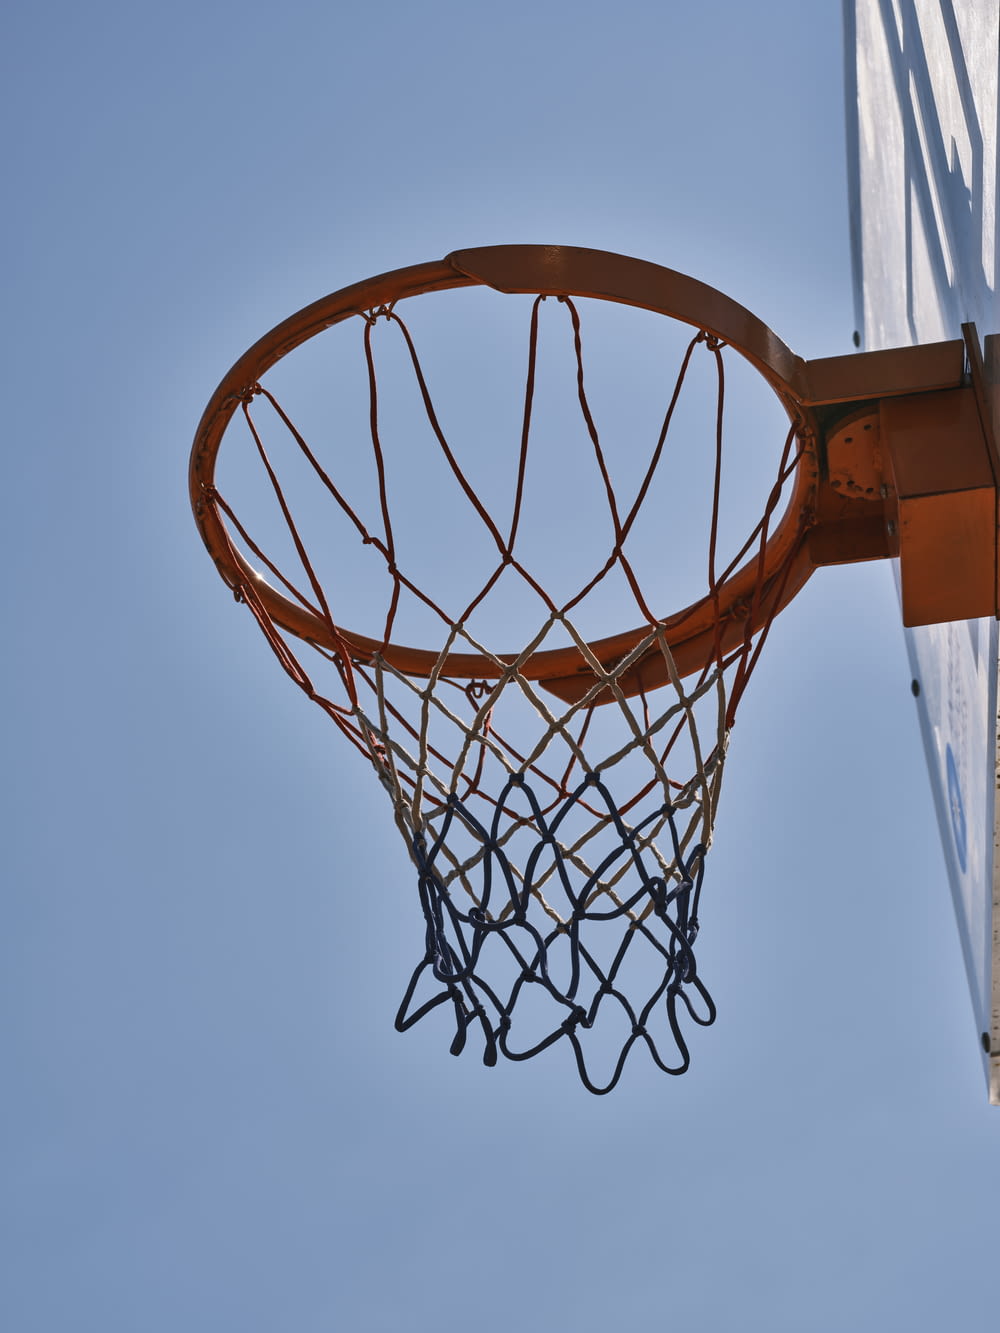 a basketball going through the net of a basketball court